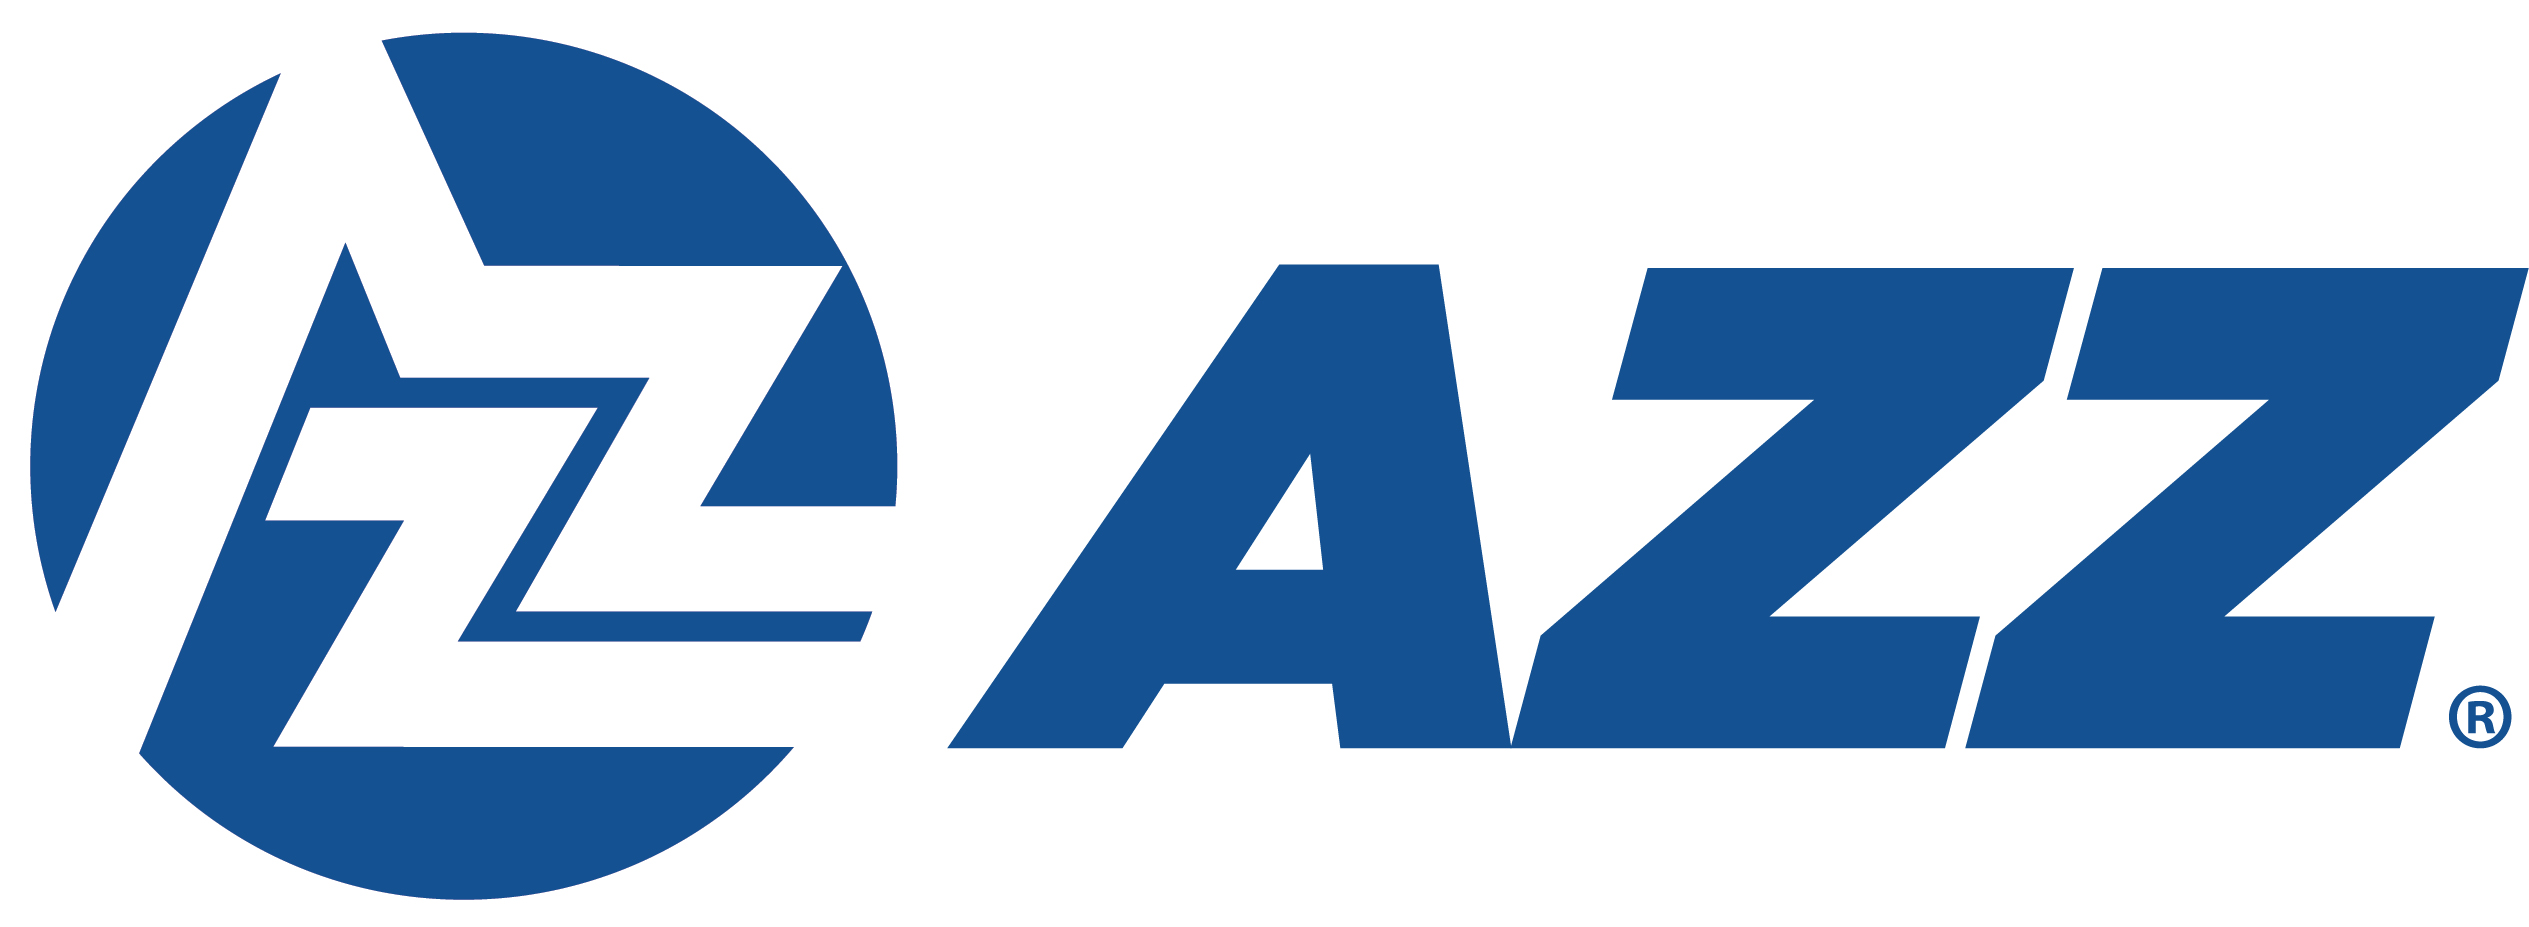 azz-20201130_g1.jpg